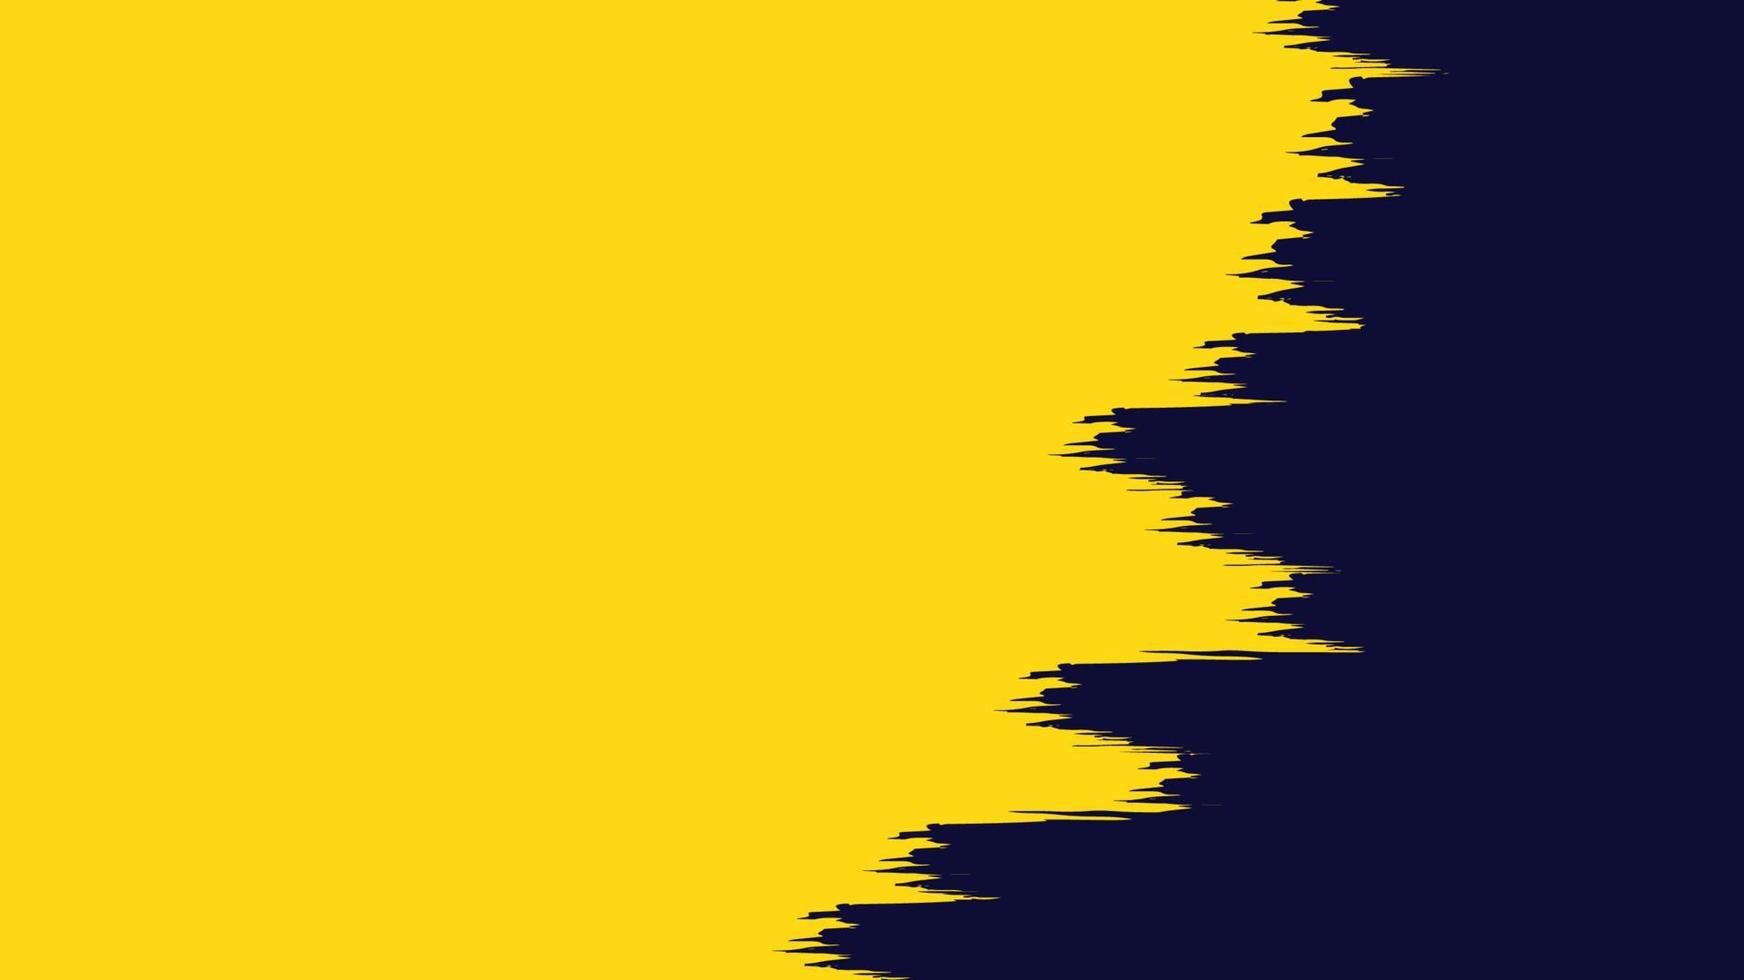 svart och gul grunge modern tumnagel bakgrund vektor